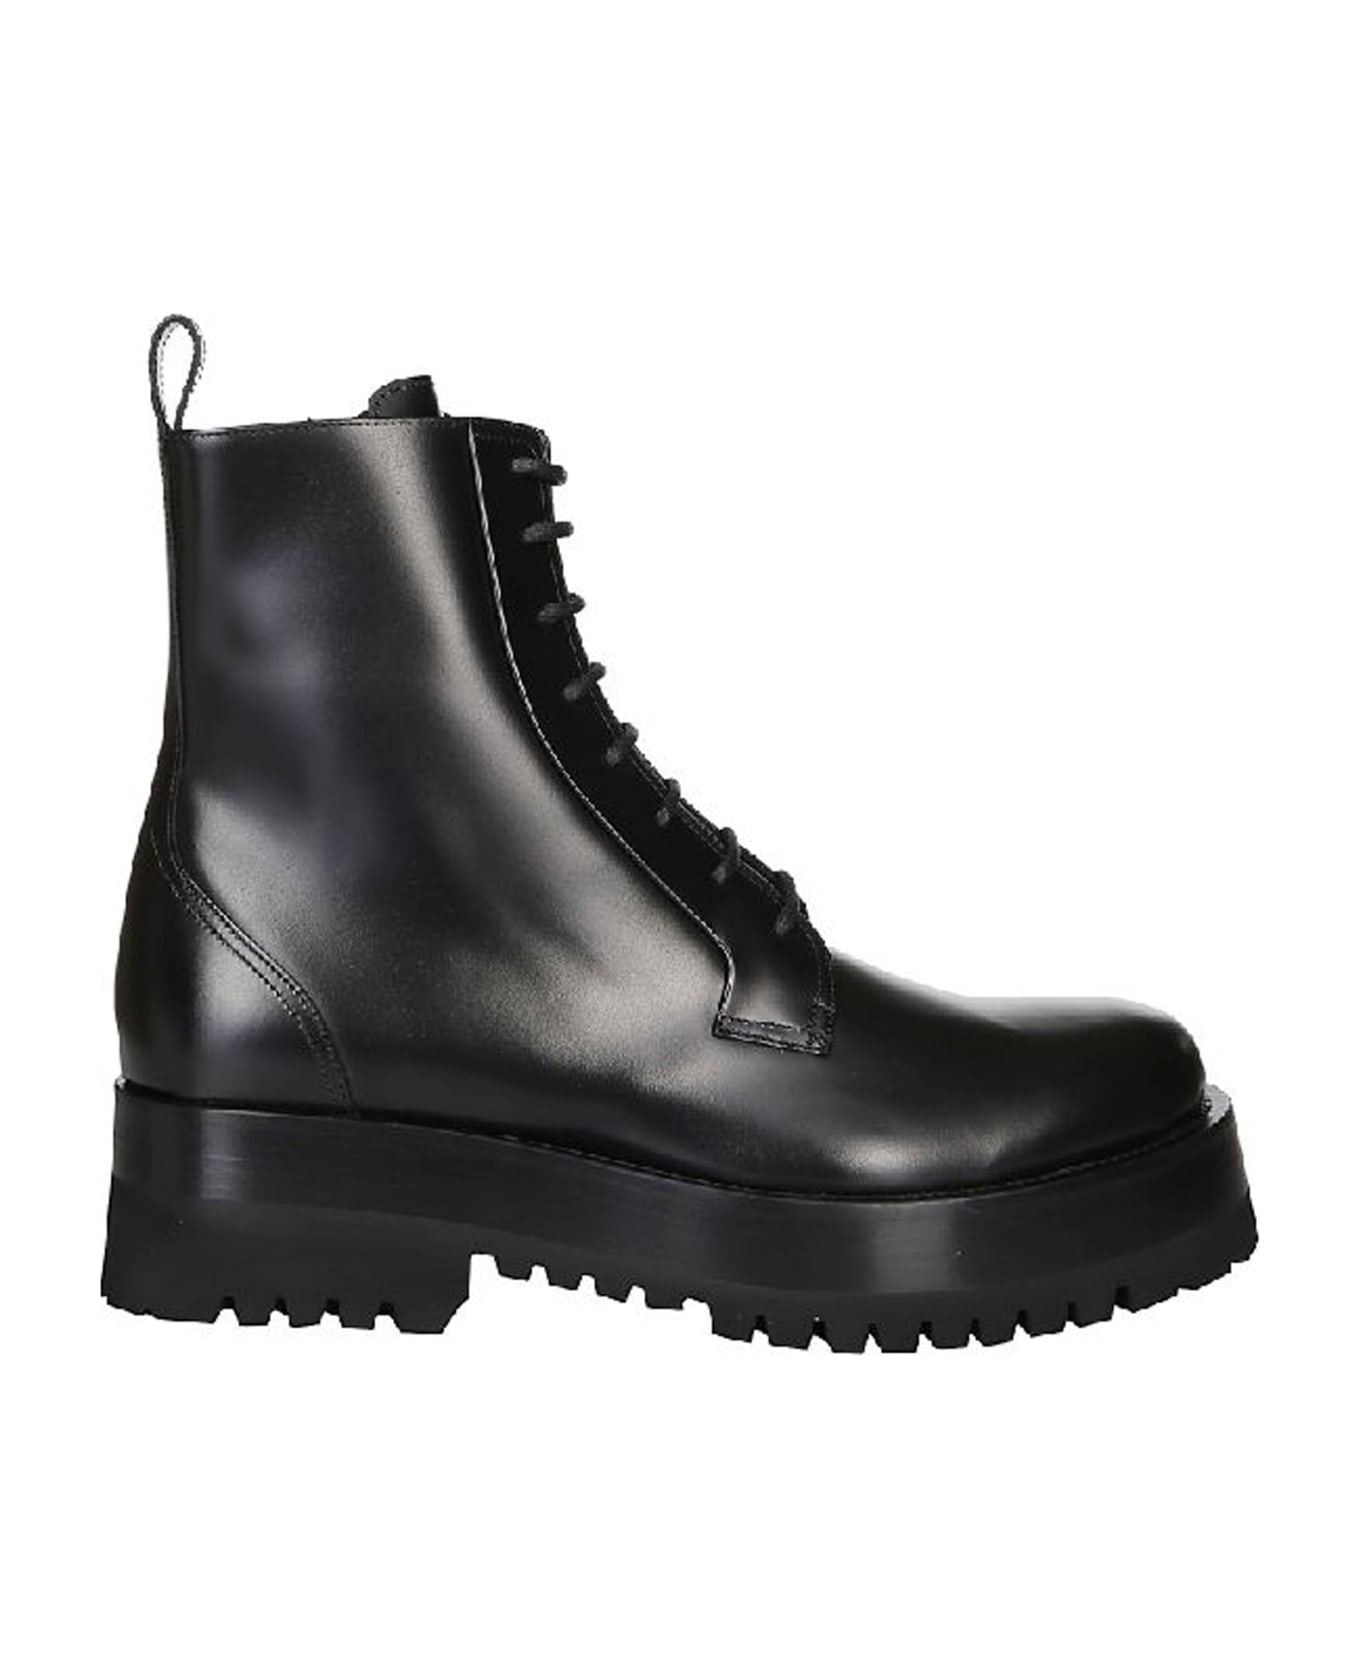 Valentino Garavani Garavani Leather Boots - Black ブーツ